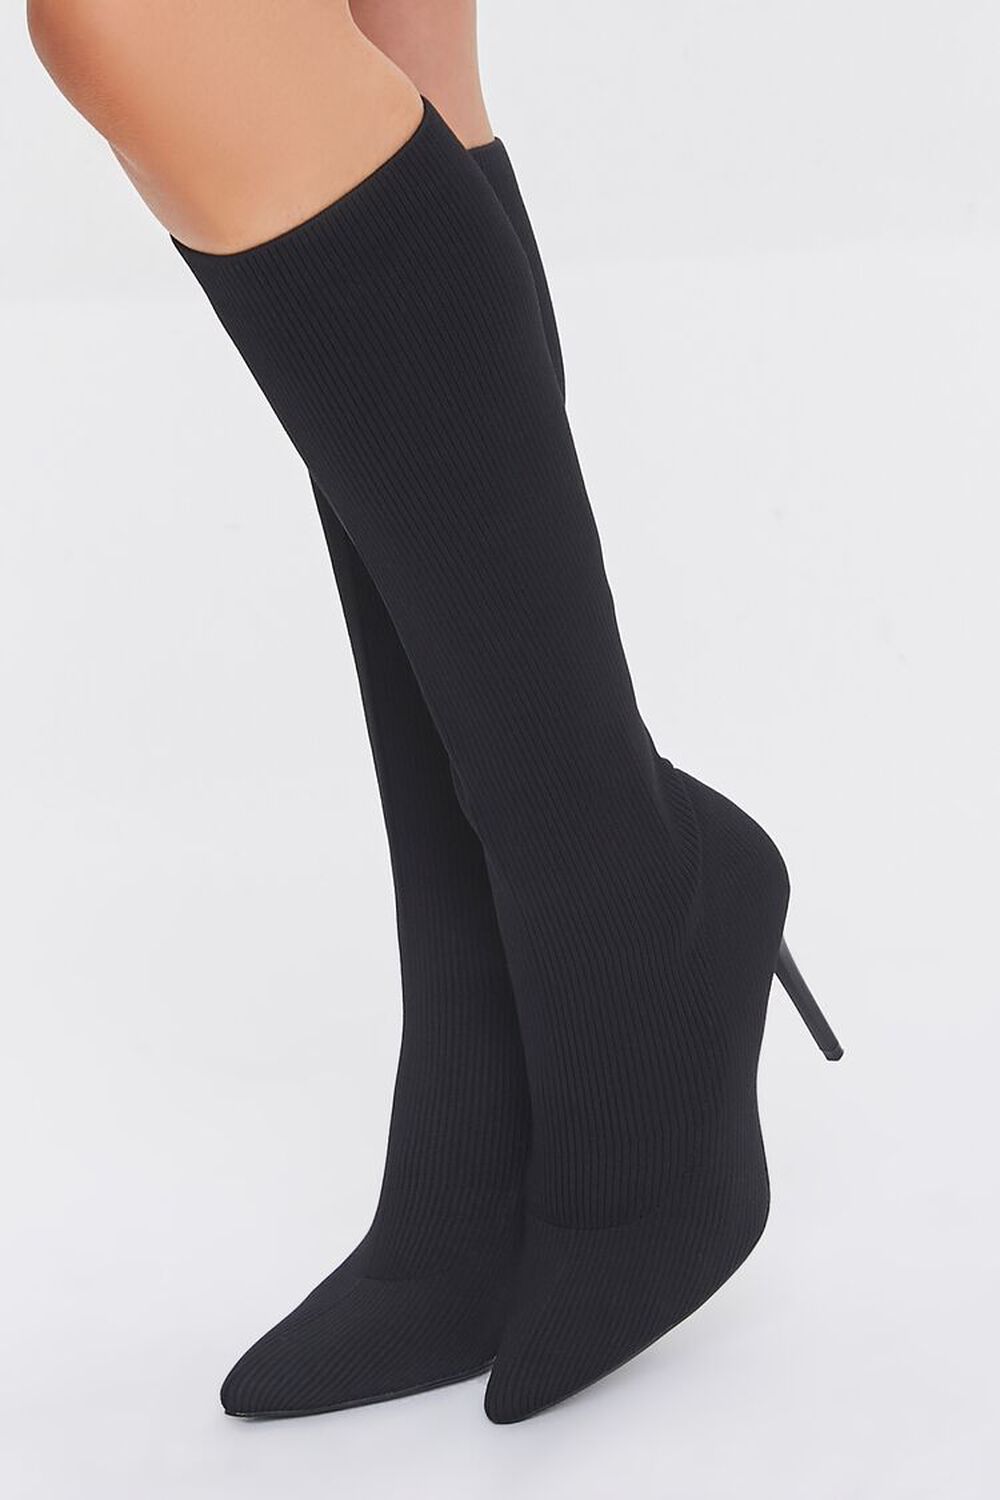 BLACK Knee-High Stiletto Sock Boots, image 1